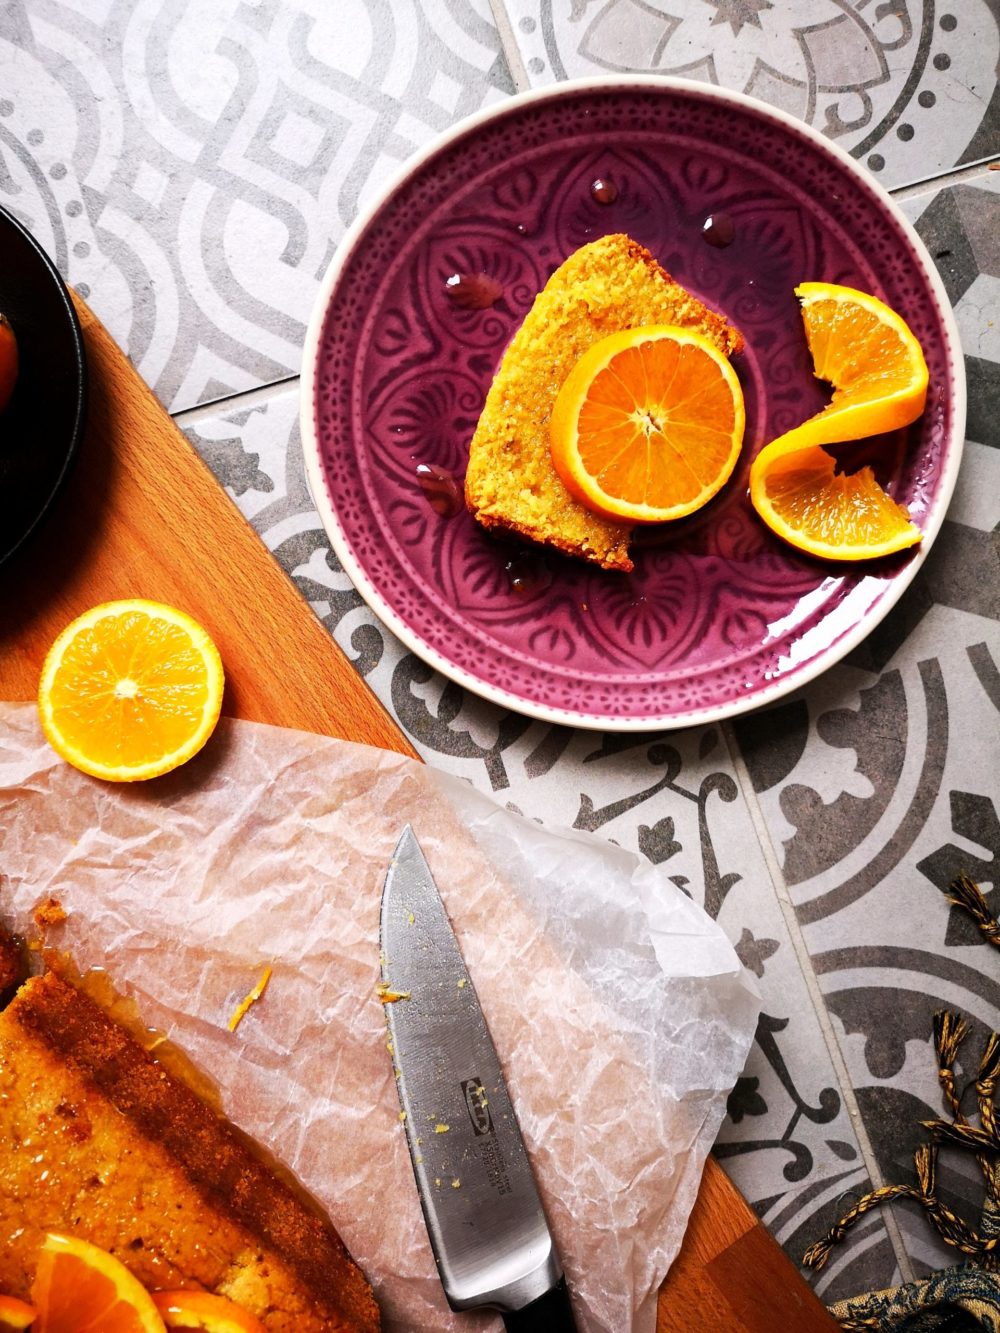 polenta cake with orange slices